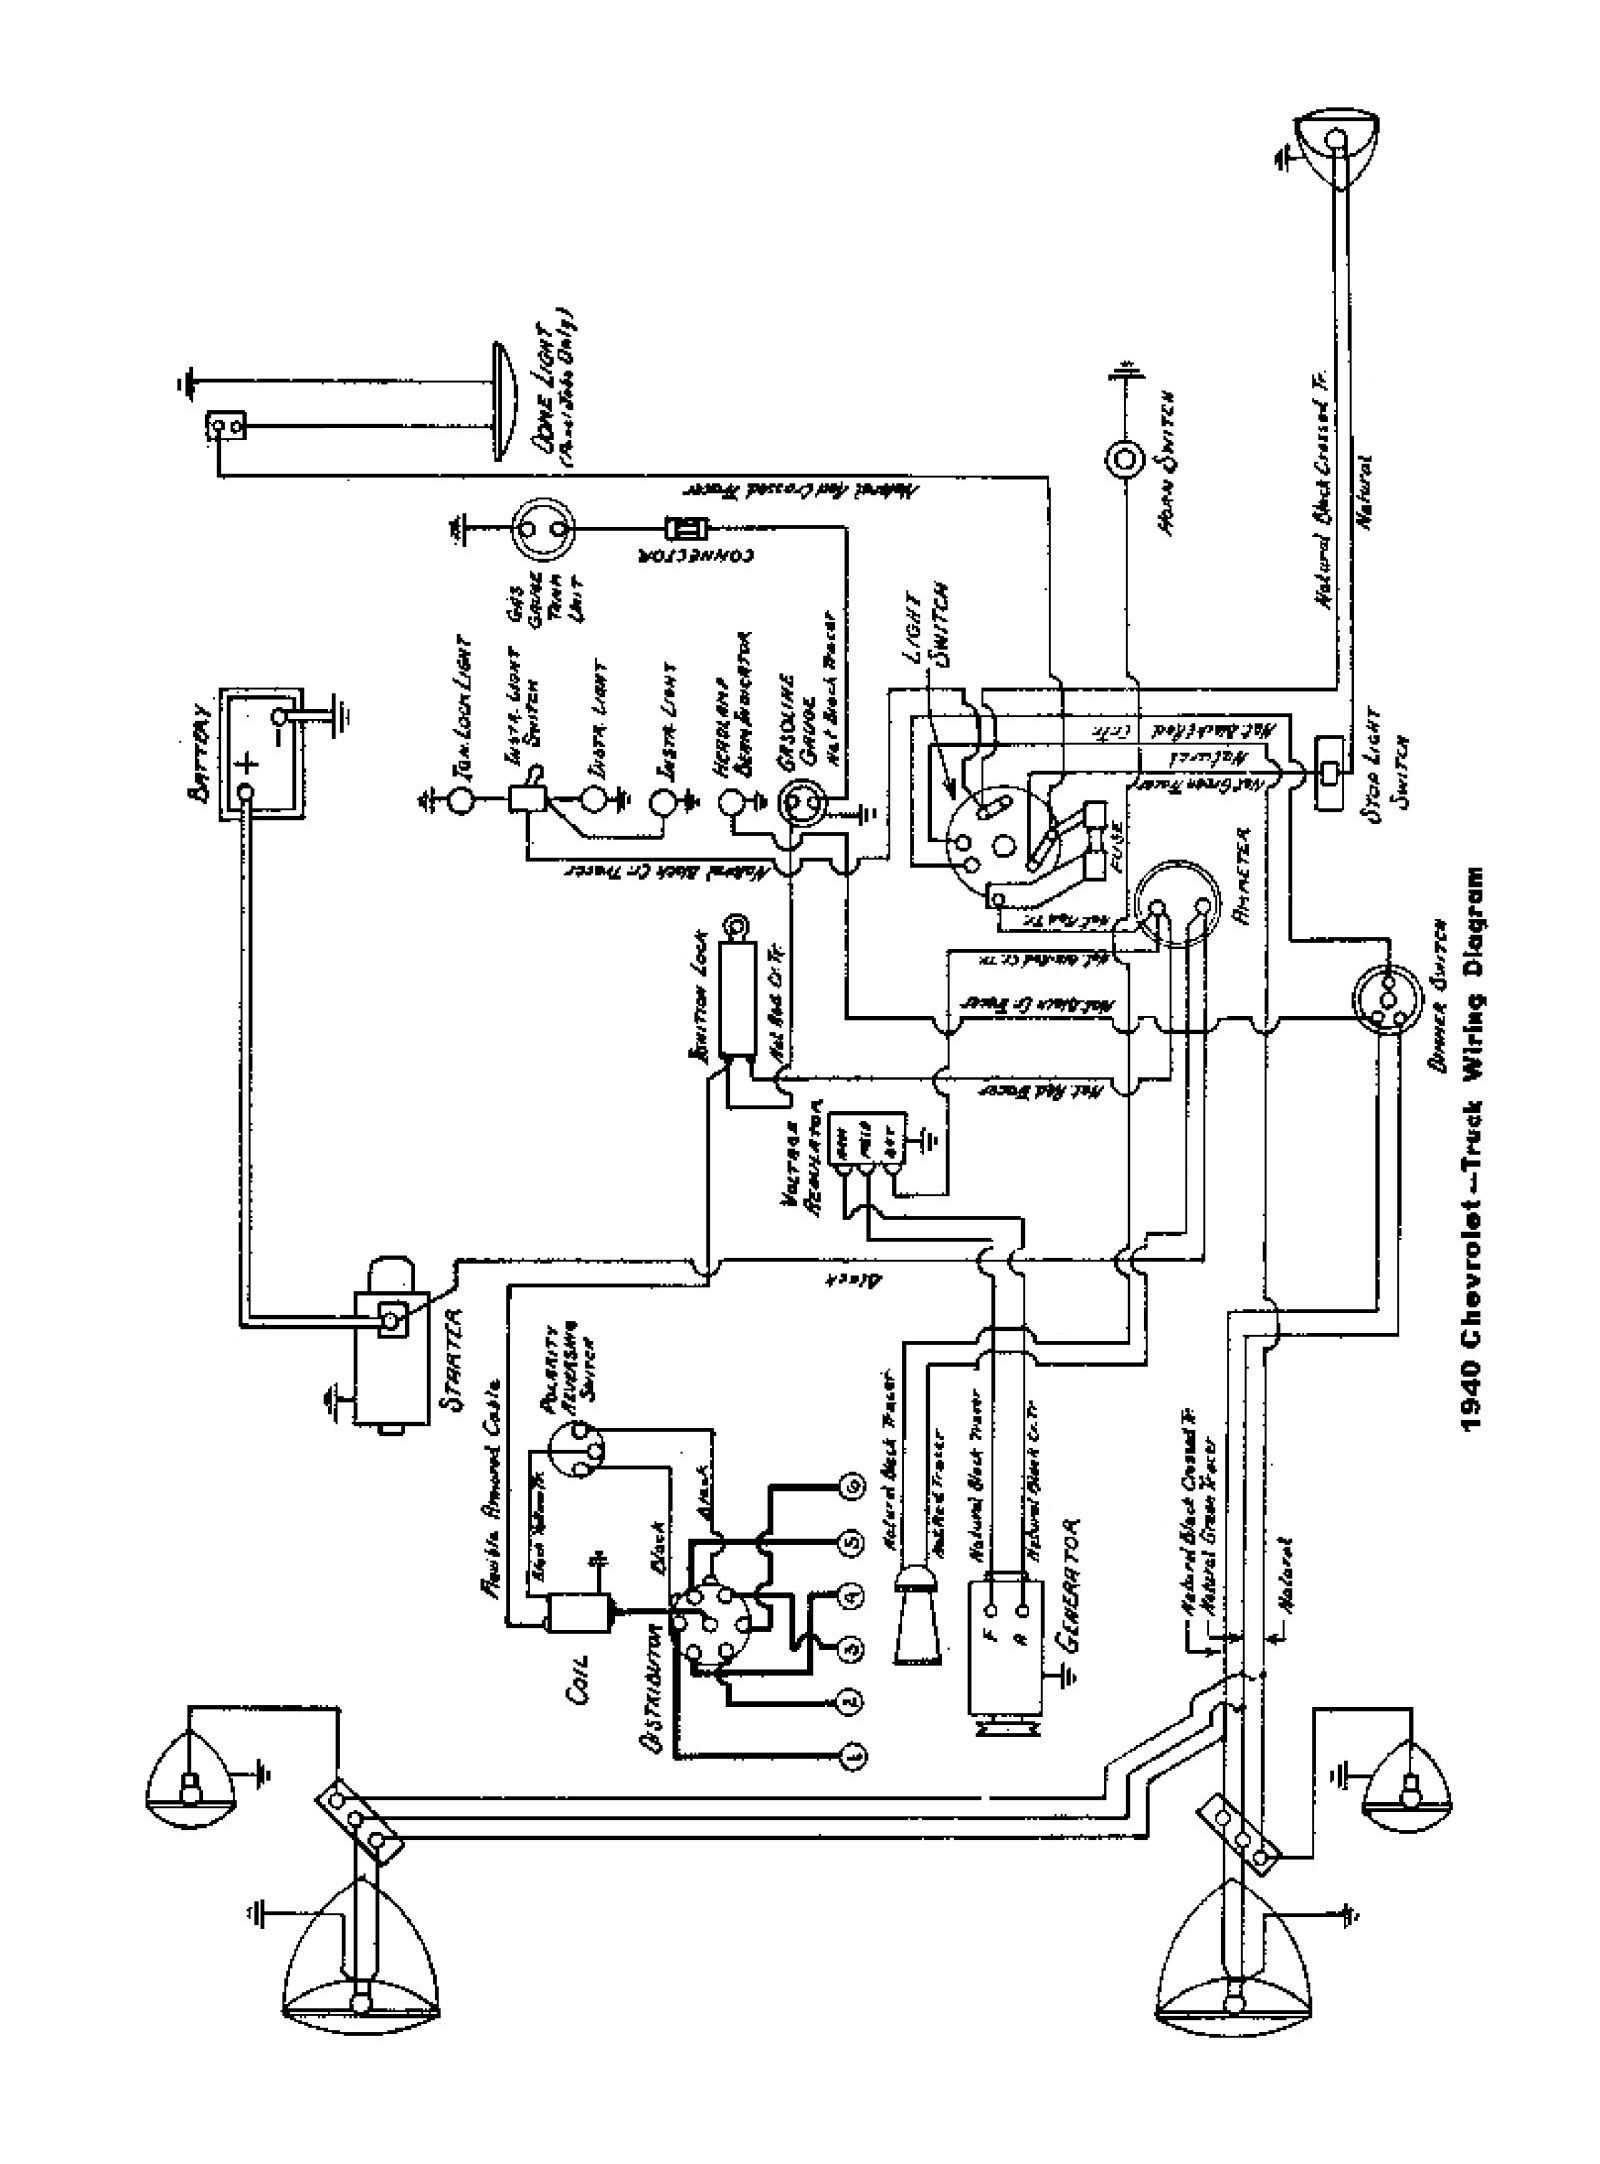 87 Chevy Truck Wiring Diagram Chevy Wiring Diagrams Of 87 Chevy Truck Wiring Diagram